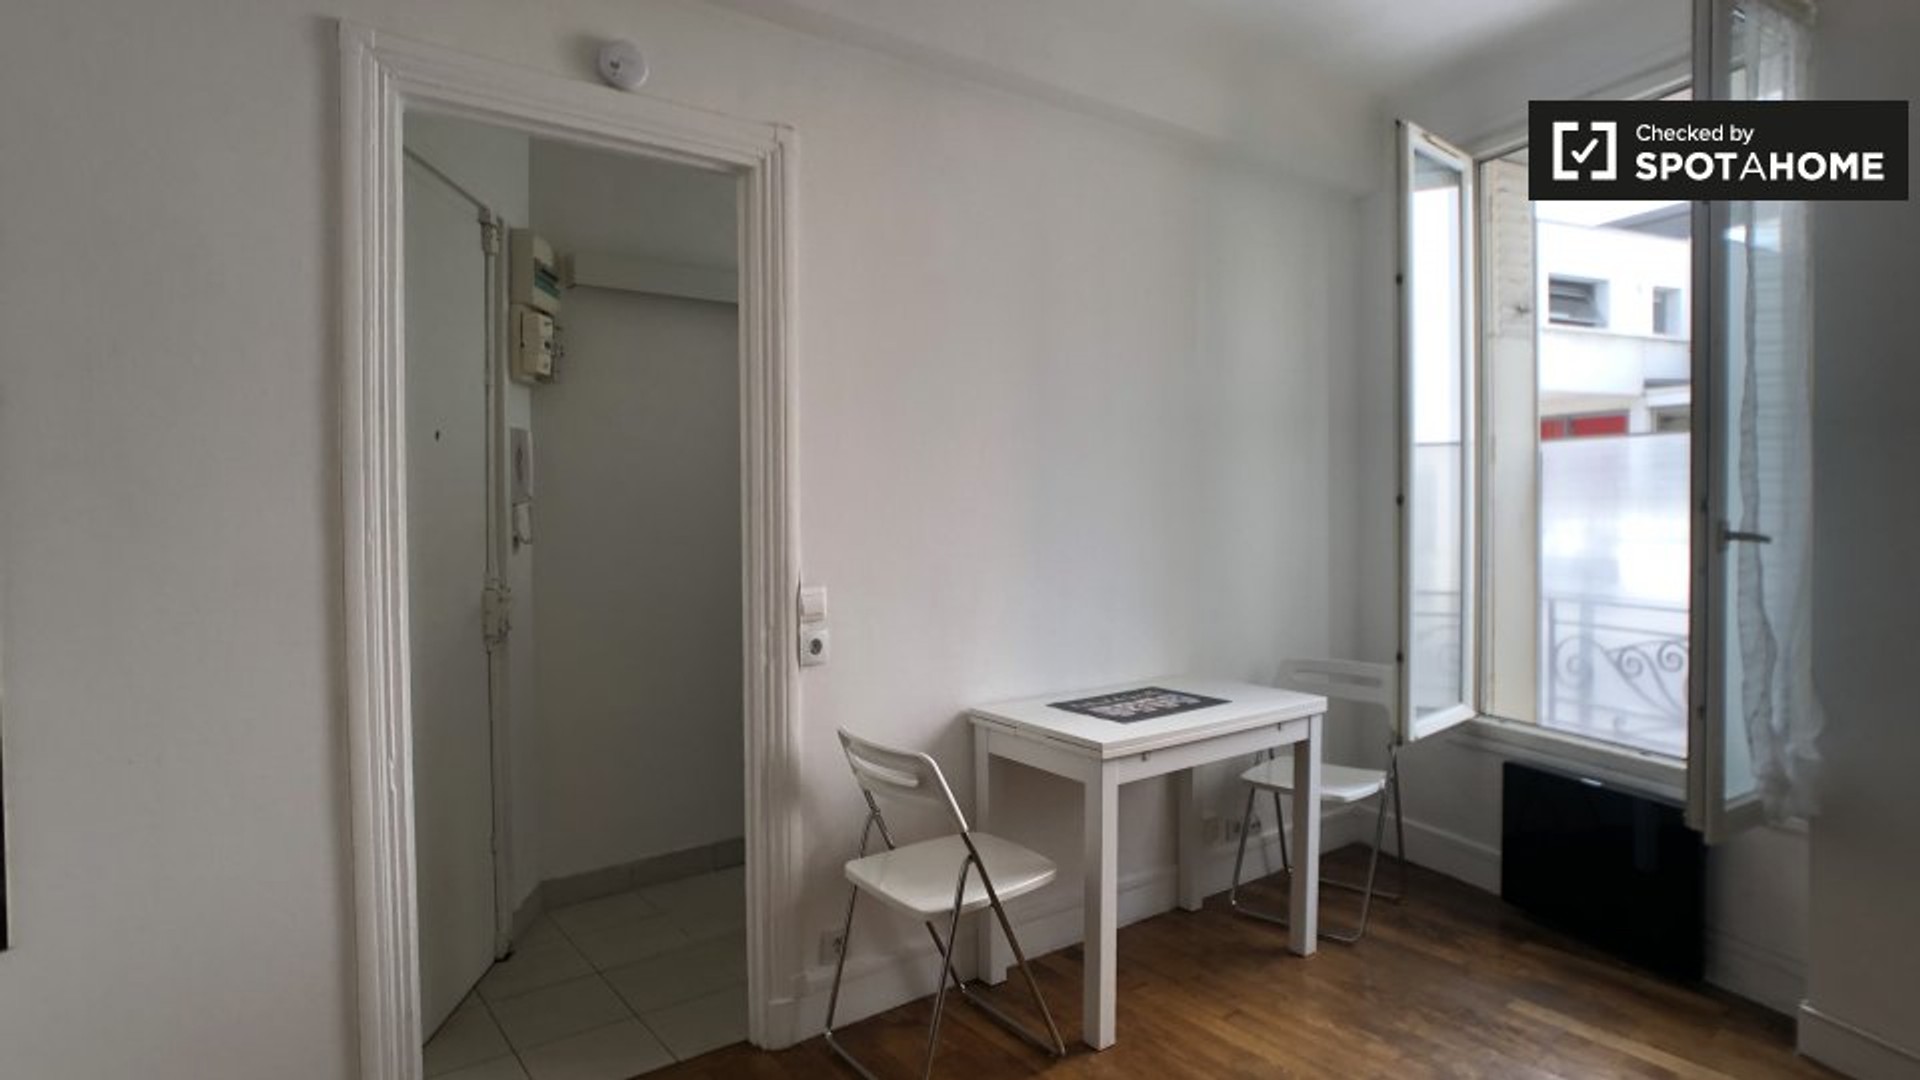 Very bright studio for rent in Boulogne-billancourt